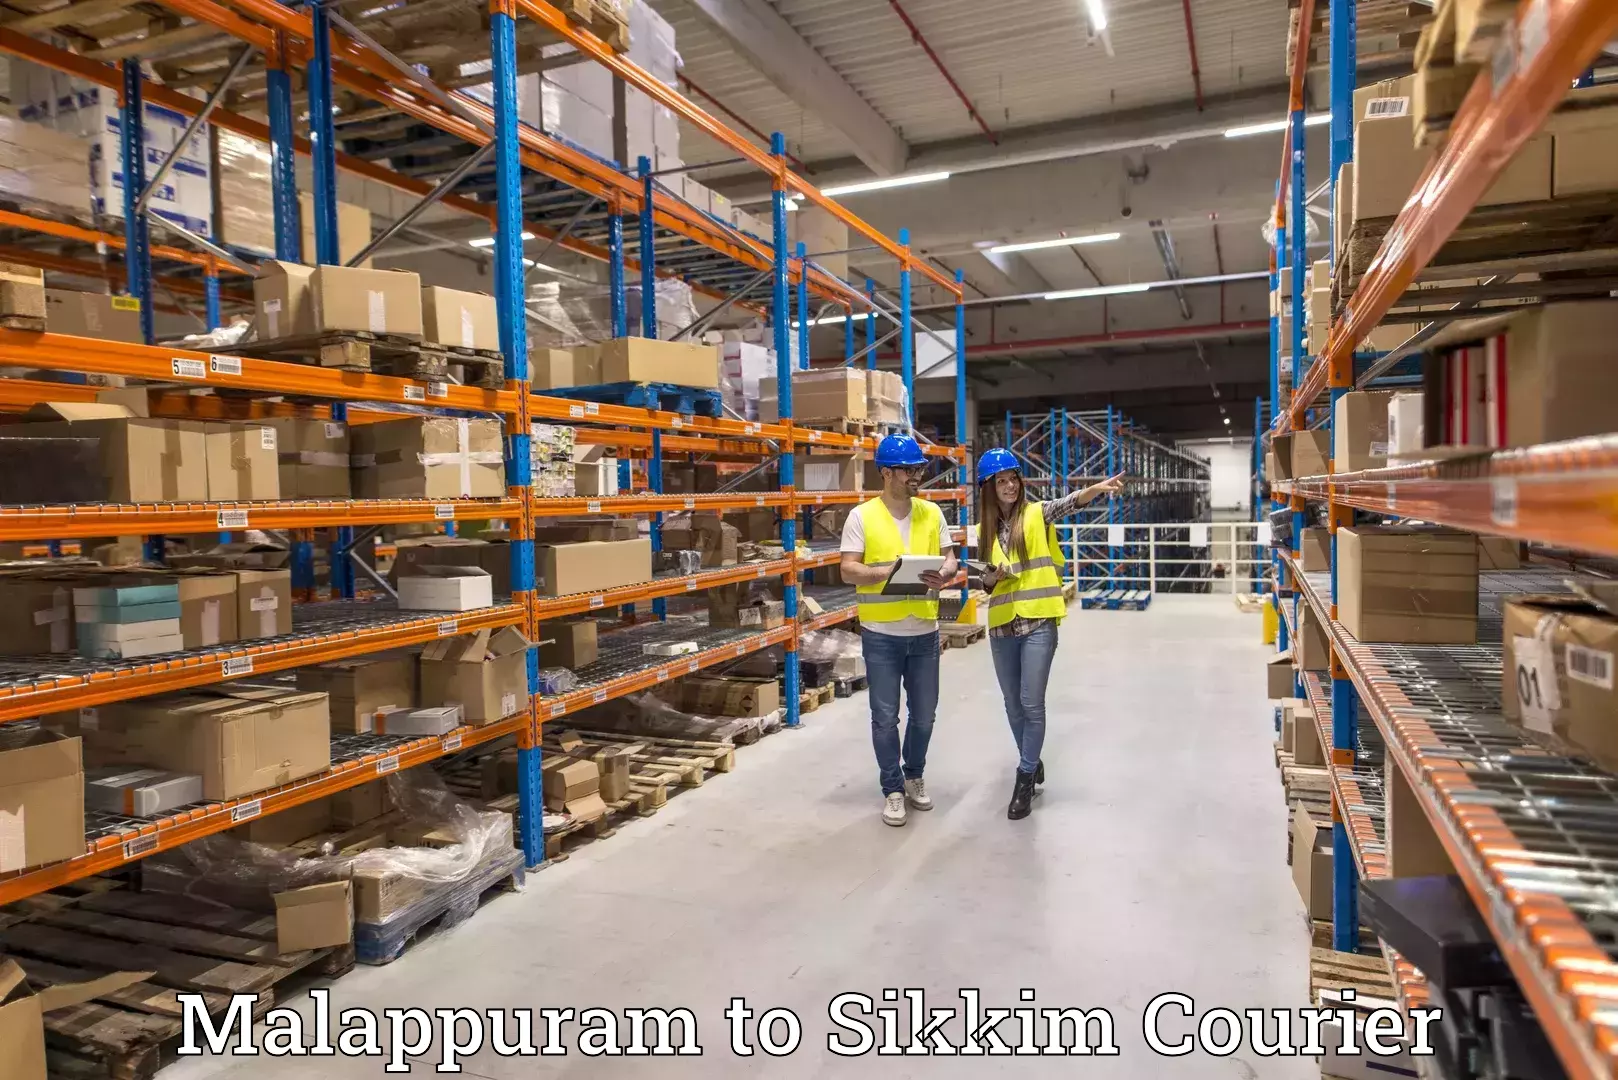 Logistics service provider Malappuram to East Sikkim